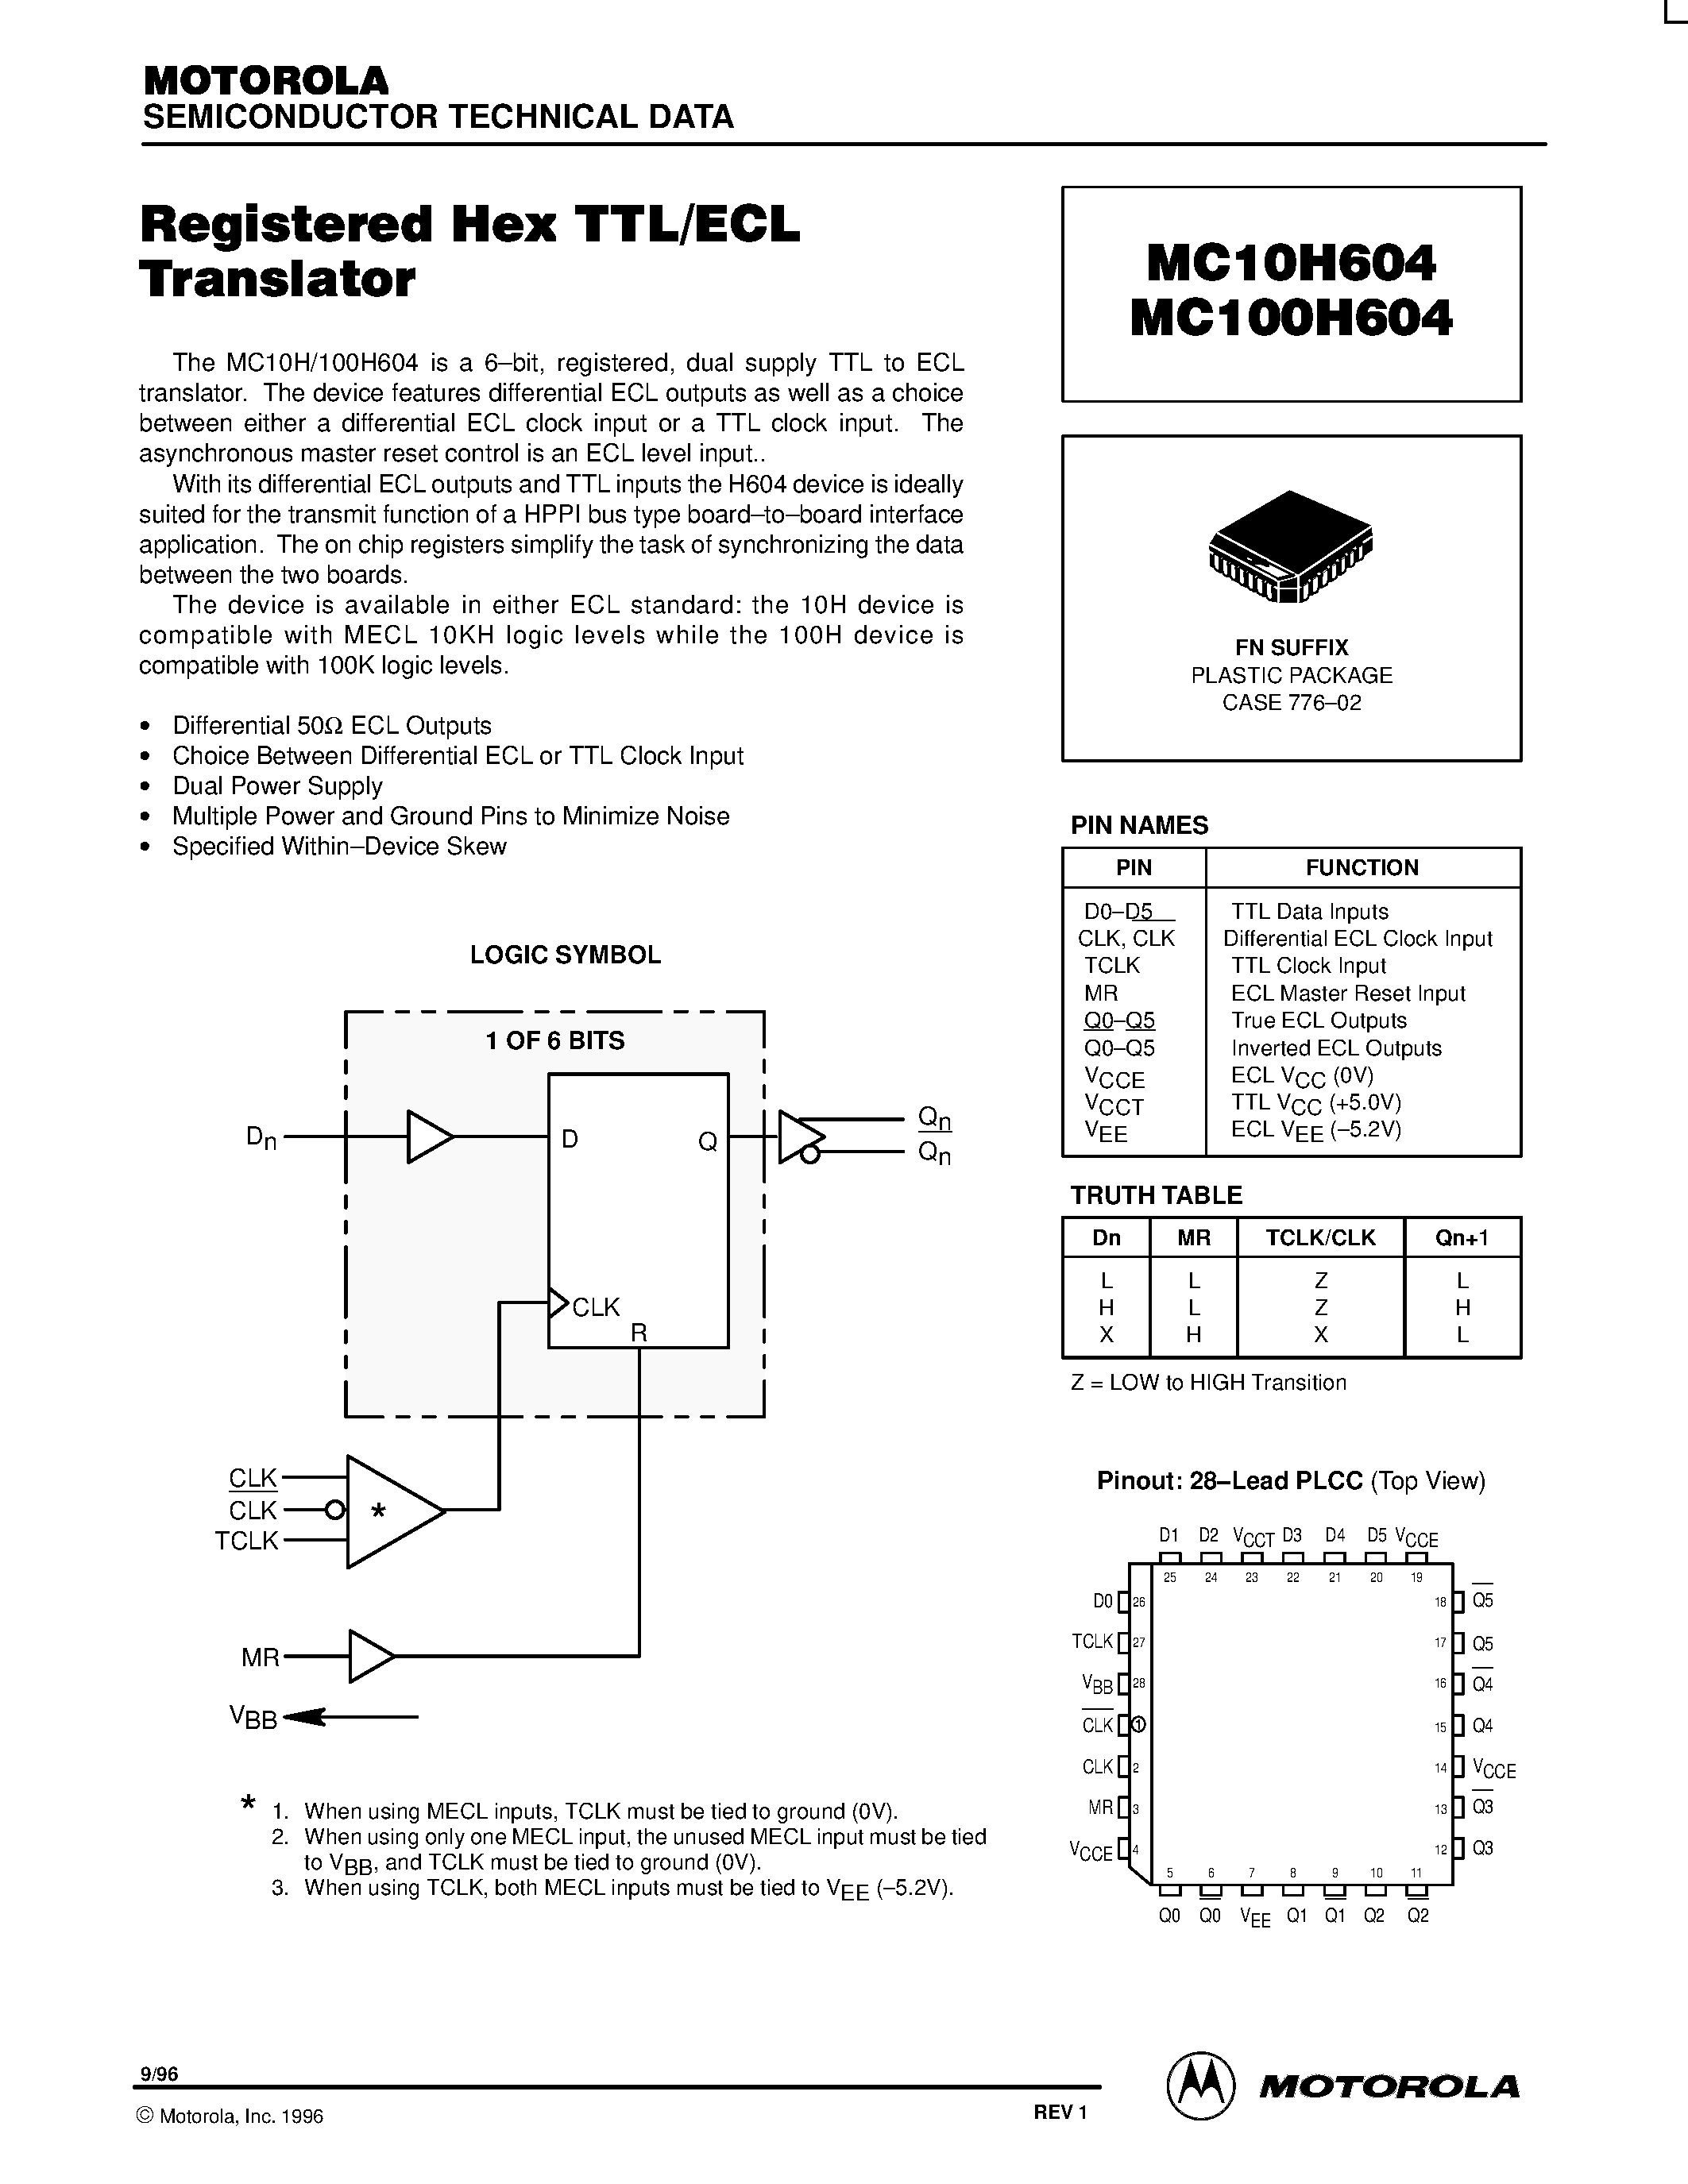 Datasheet MC10H604 - Registered Hex TTL/ECL Translator page 1